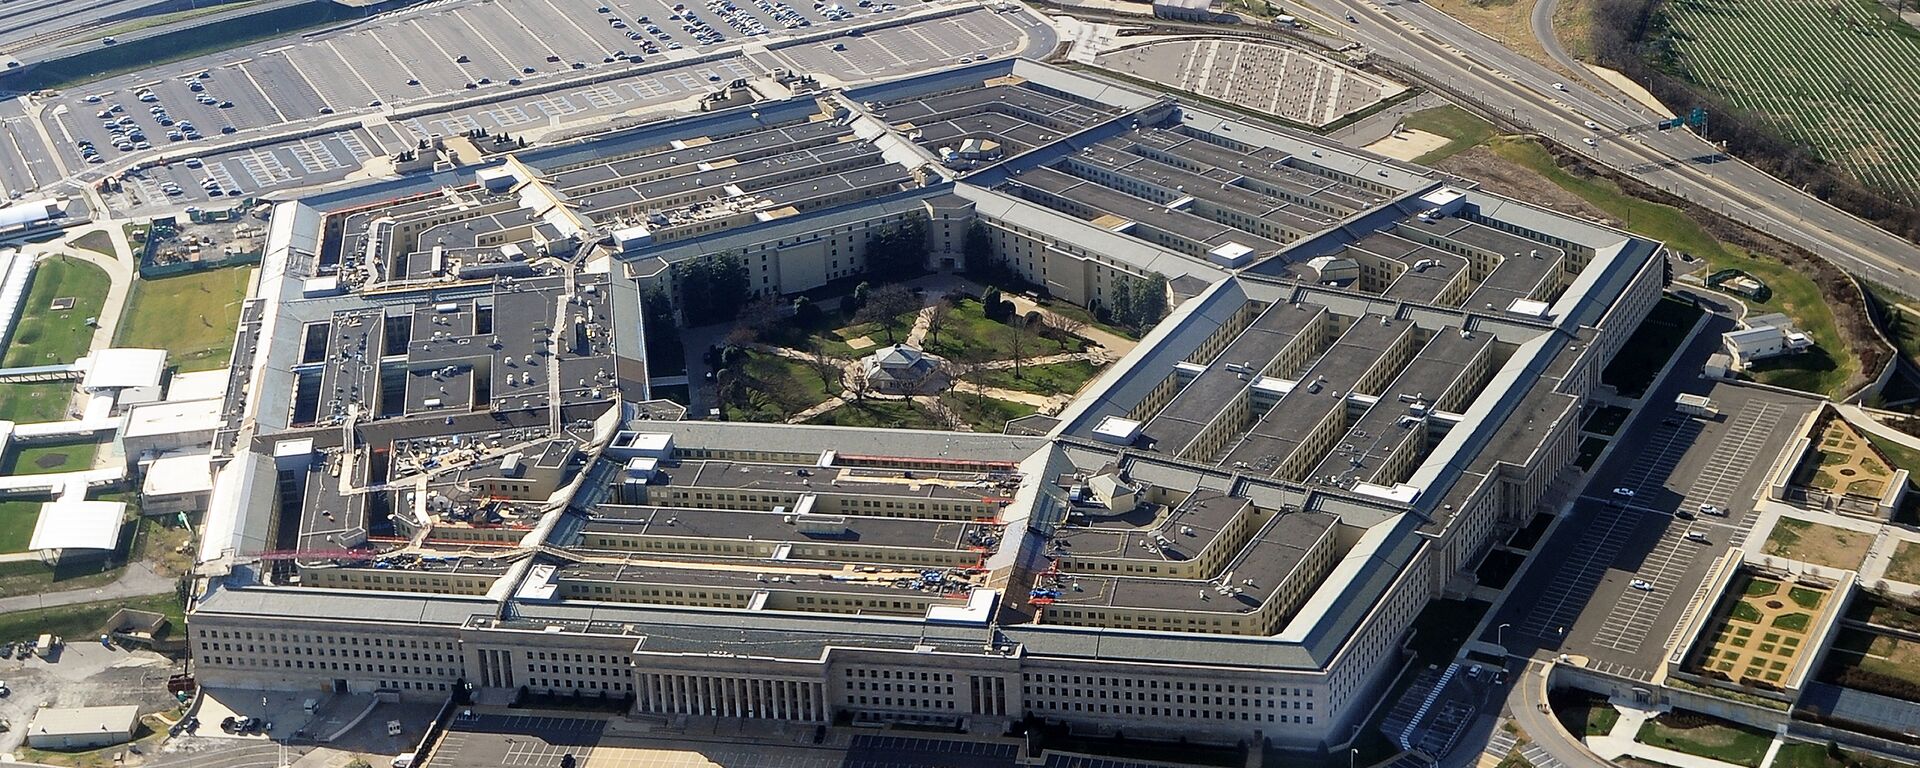 The Pentagon building in Washington, DC - Sputnik International, 1920, 09.04.2021